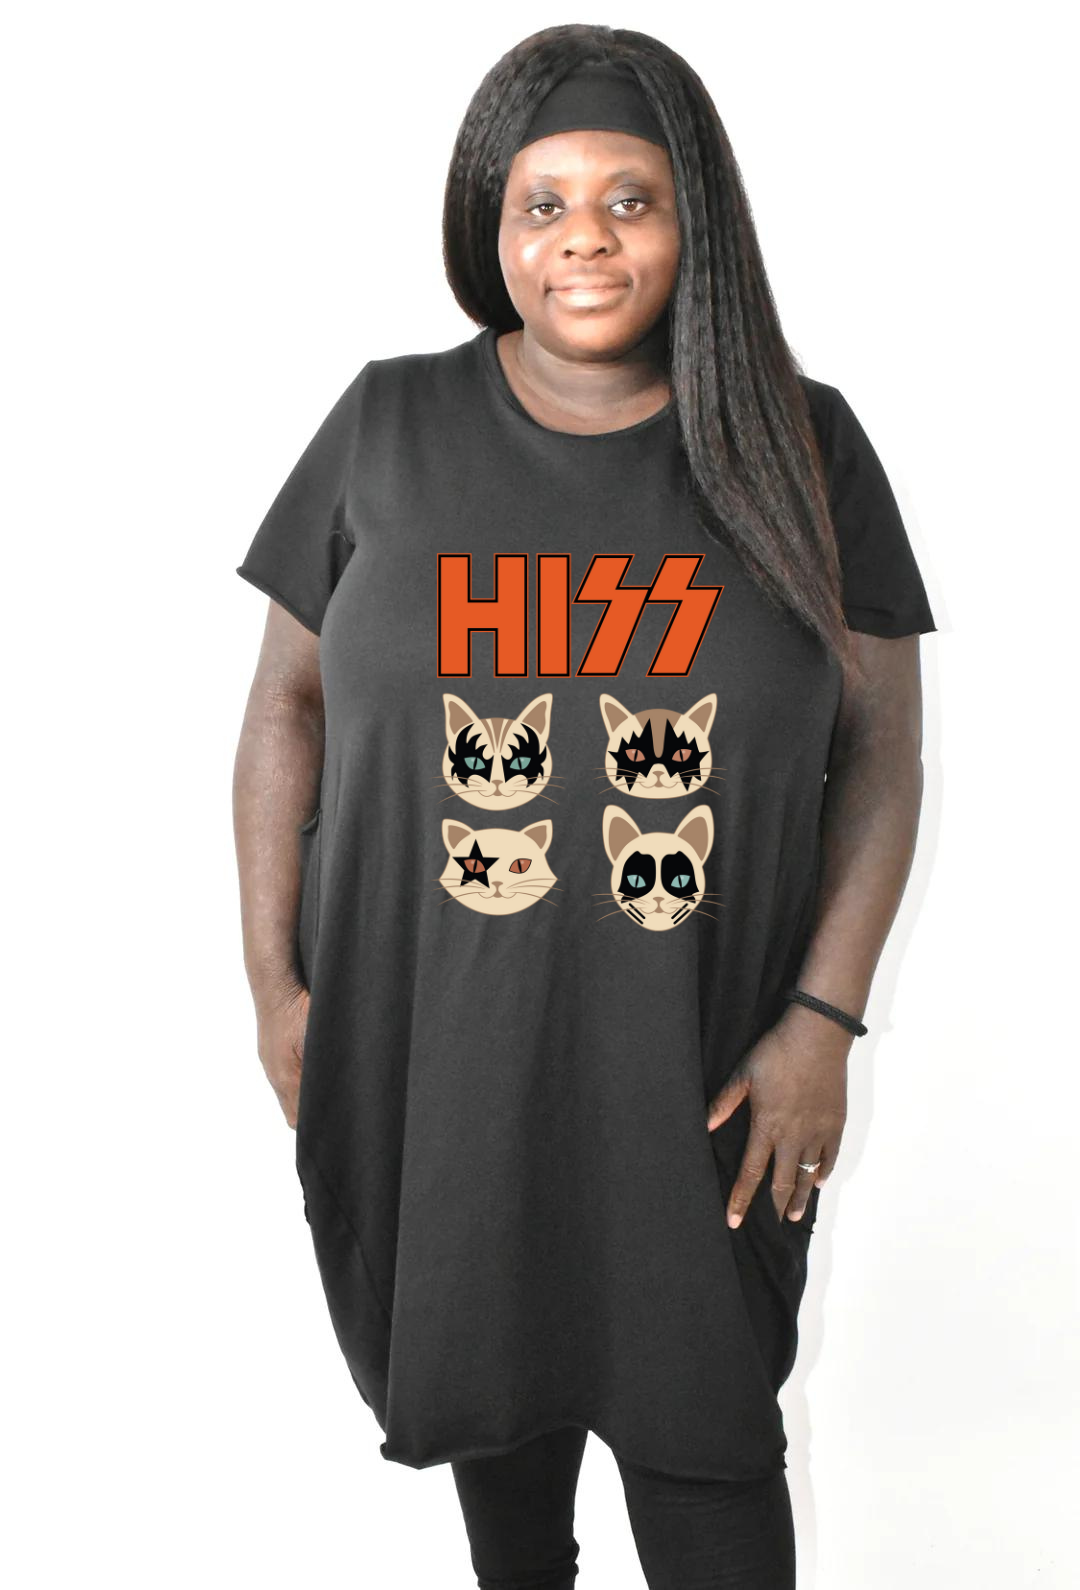 Black “HISS" Printed T-shirt Dress